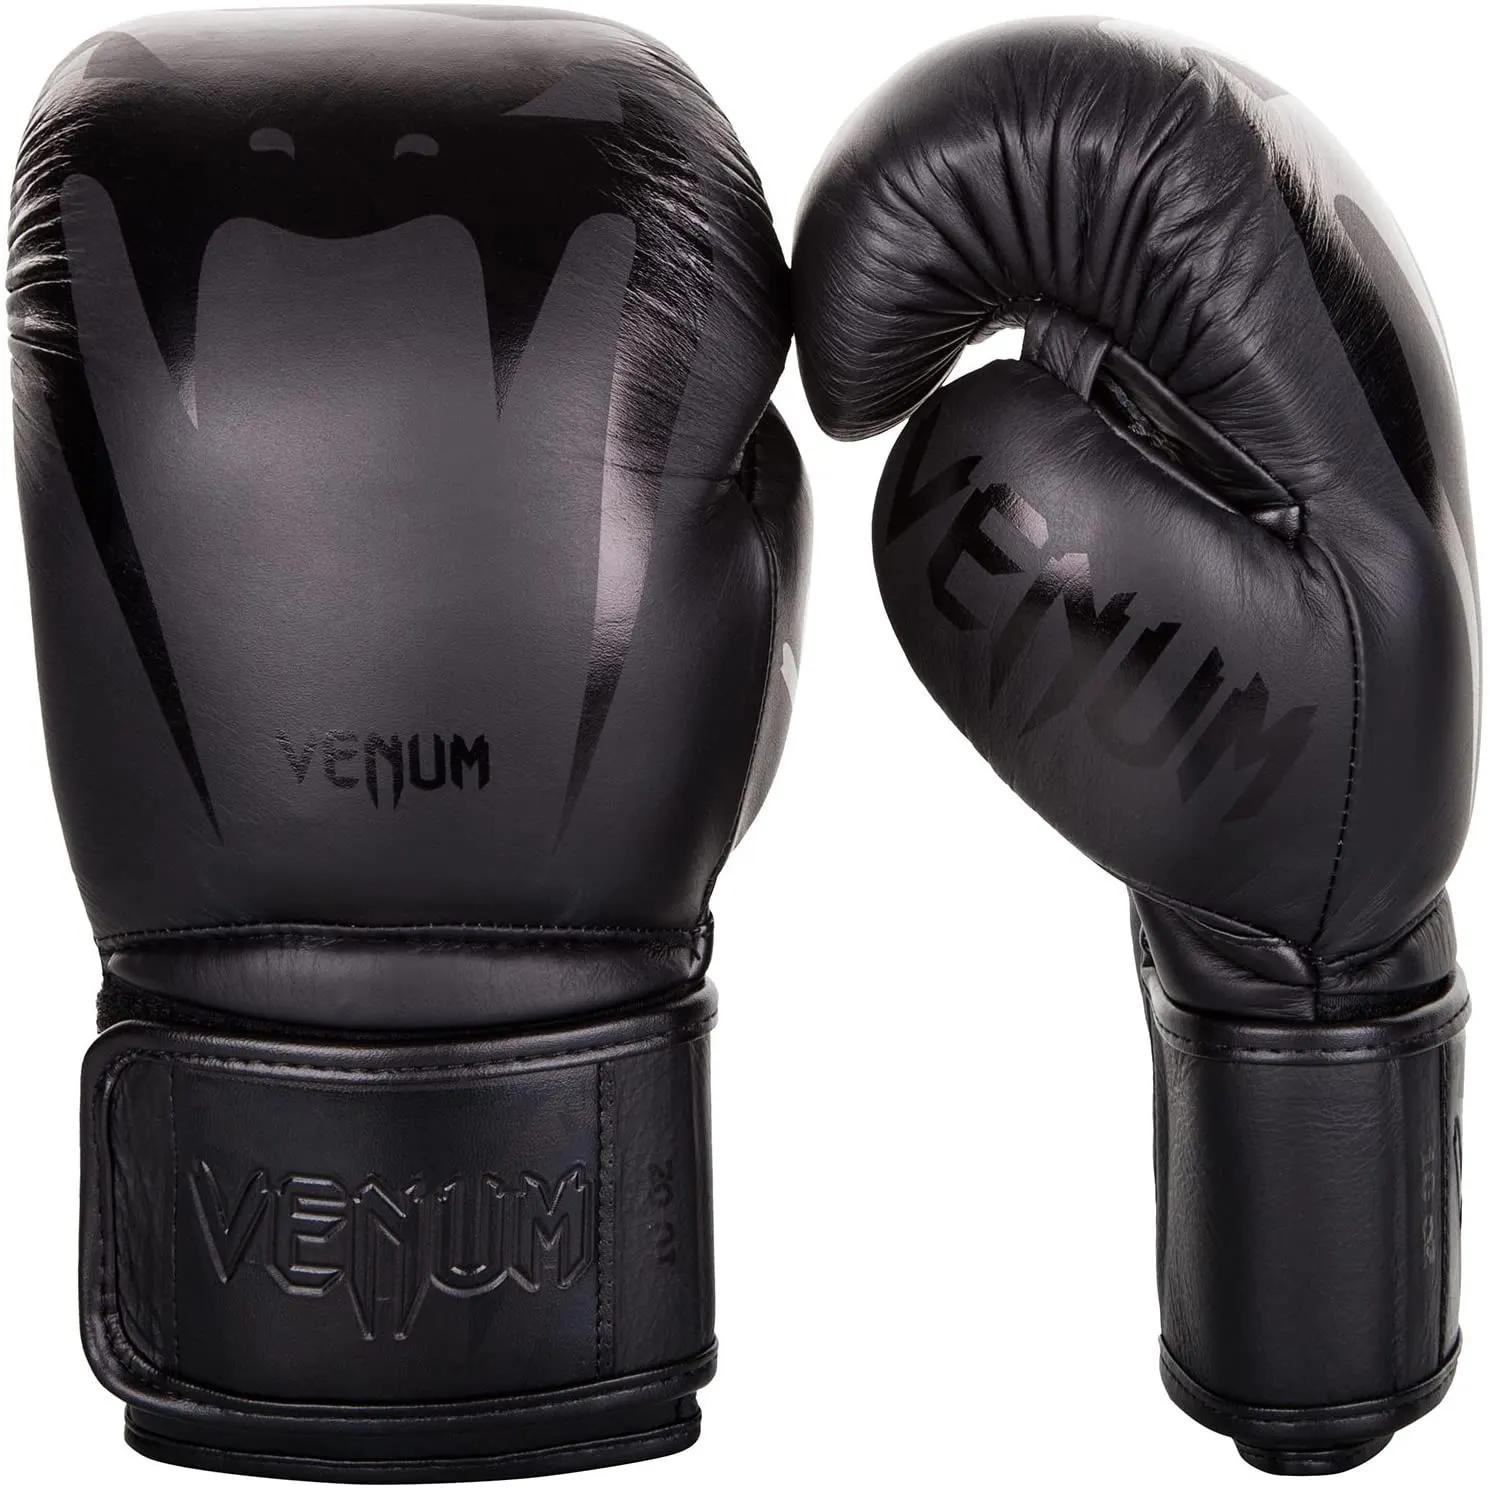 Venum-Giant-3.0-Boxing-Gloves